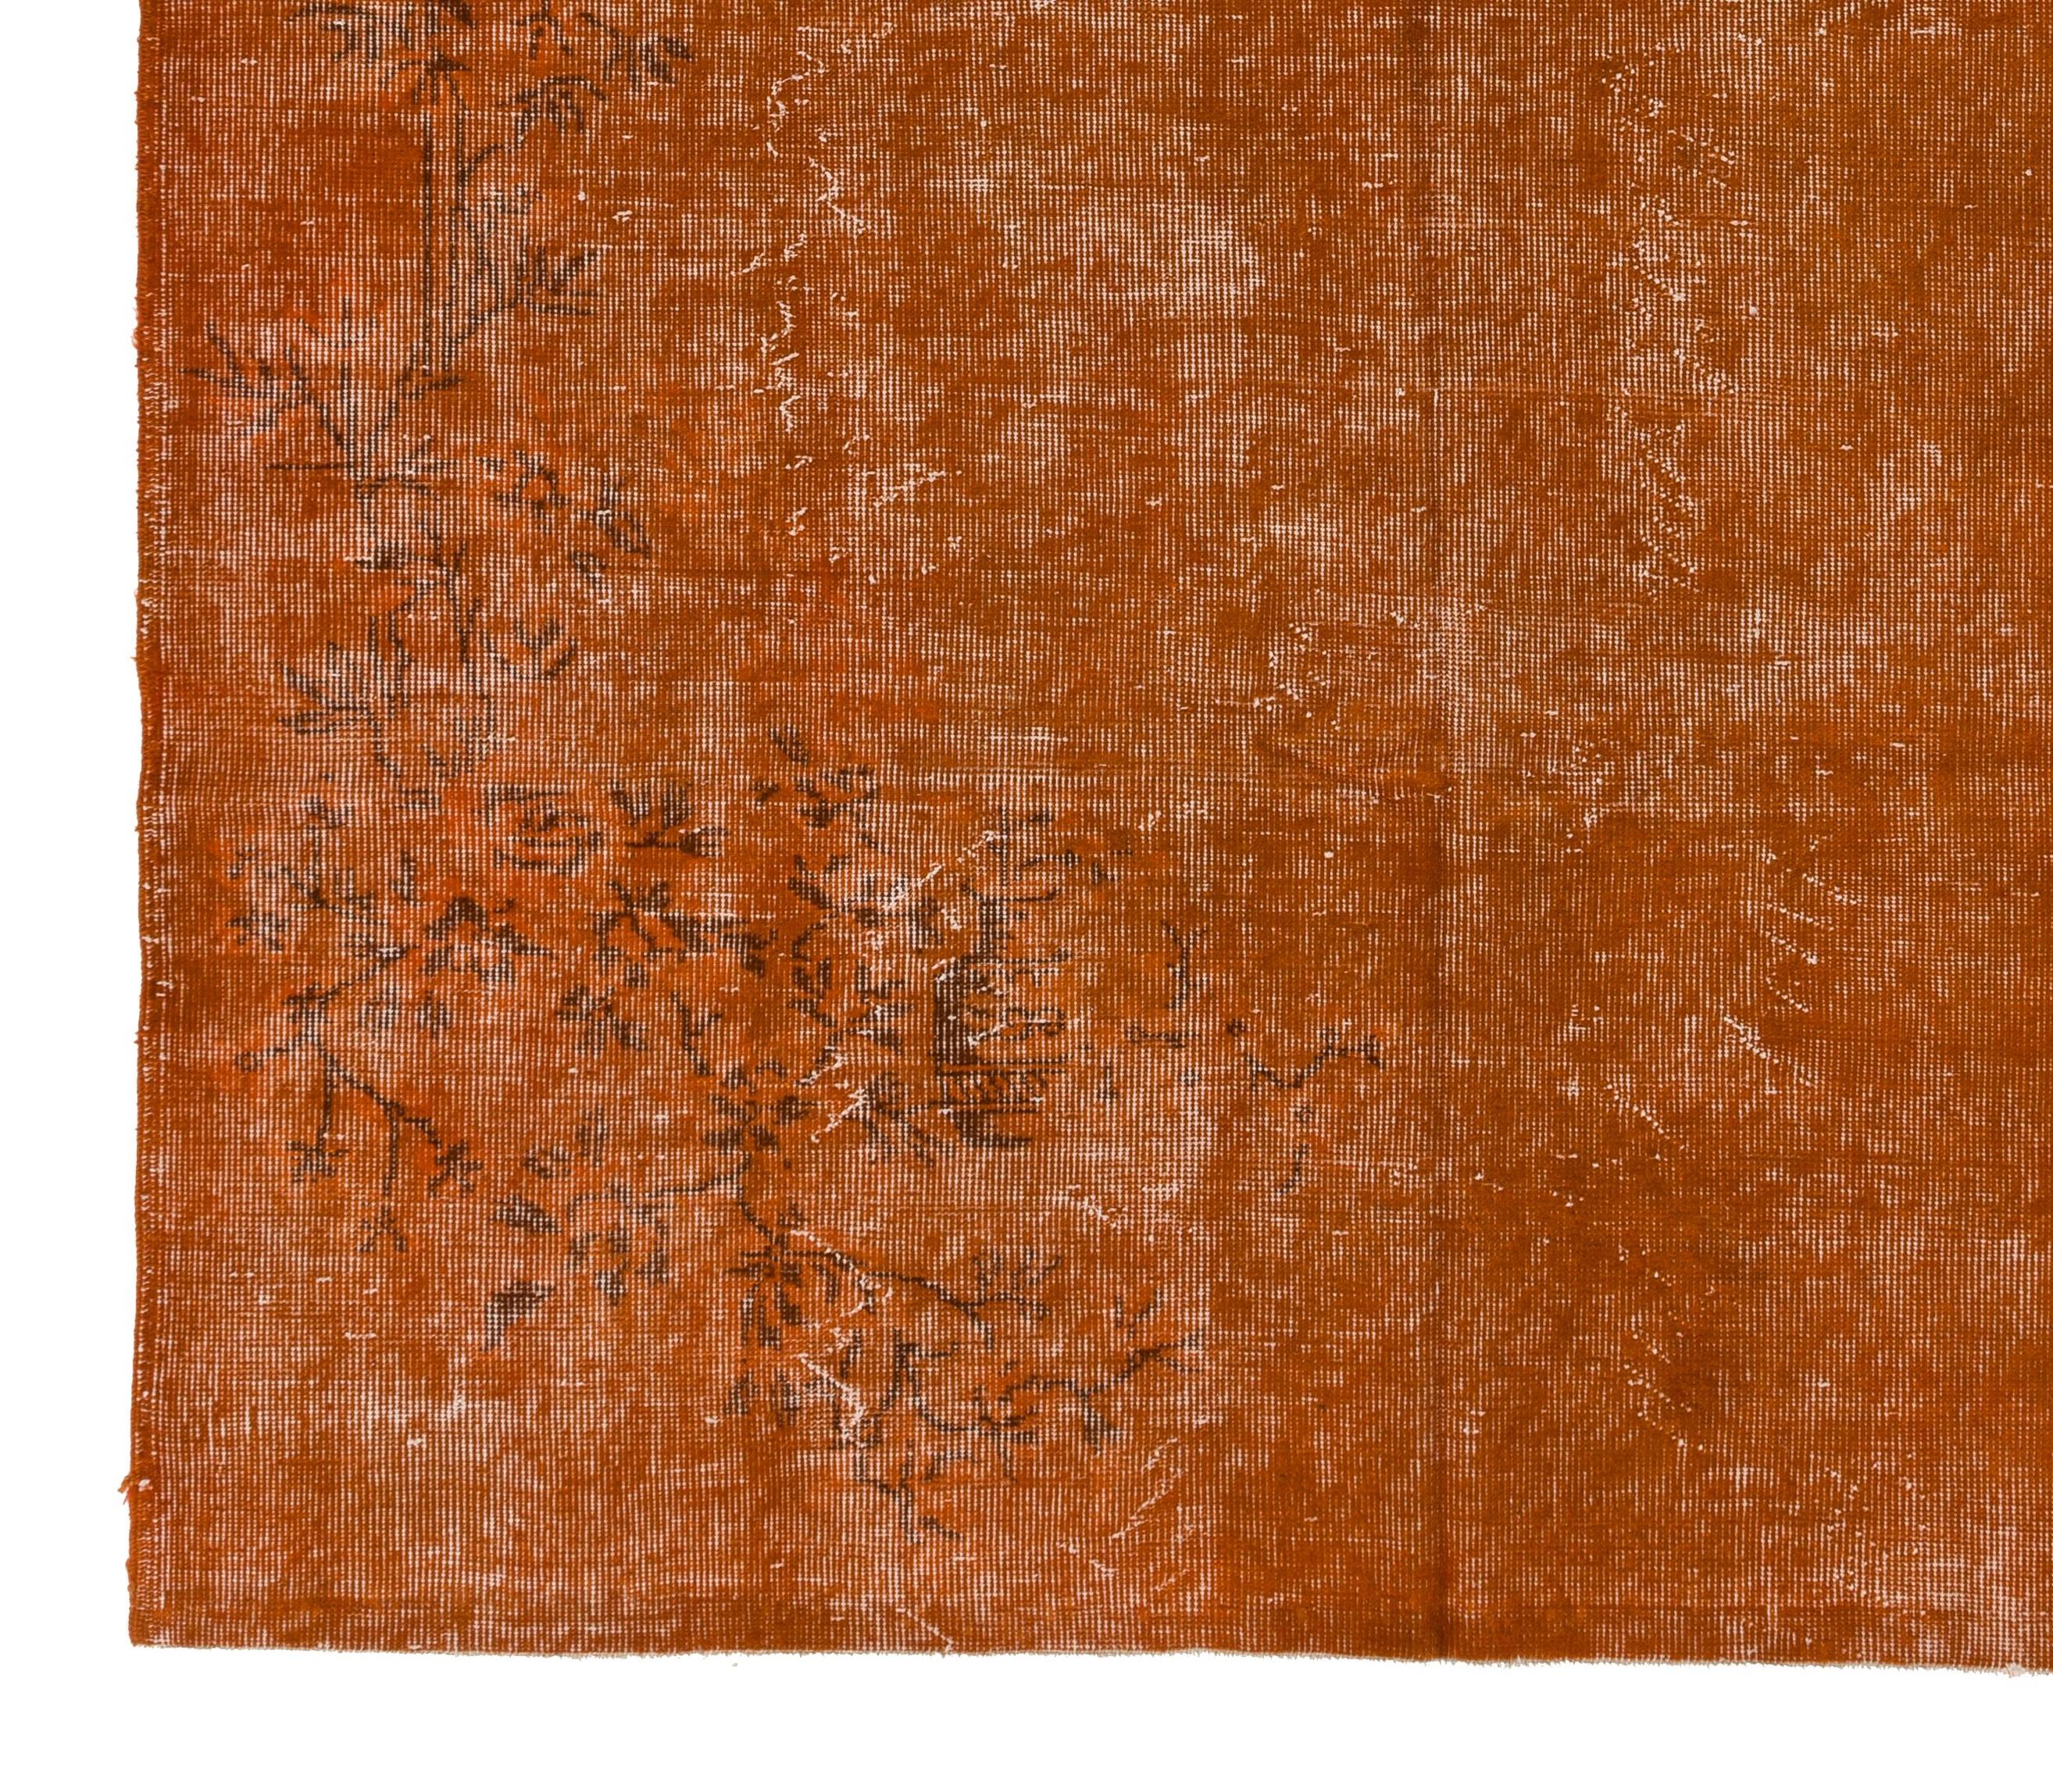 Hand-Woven 6x9 Ft Distressed Vintage Rug Overdyed in Burnt Orange, Woolen Floor Covering